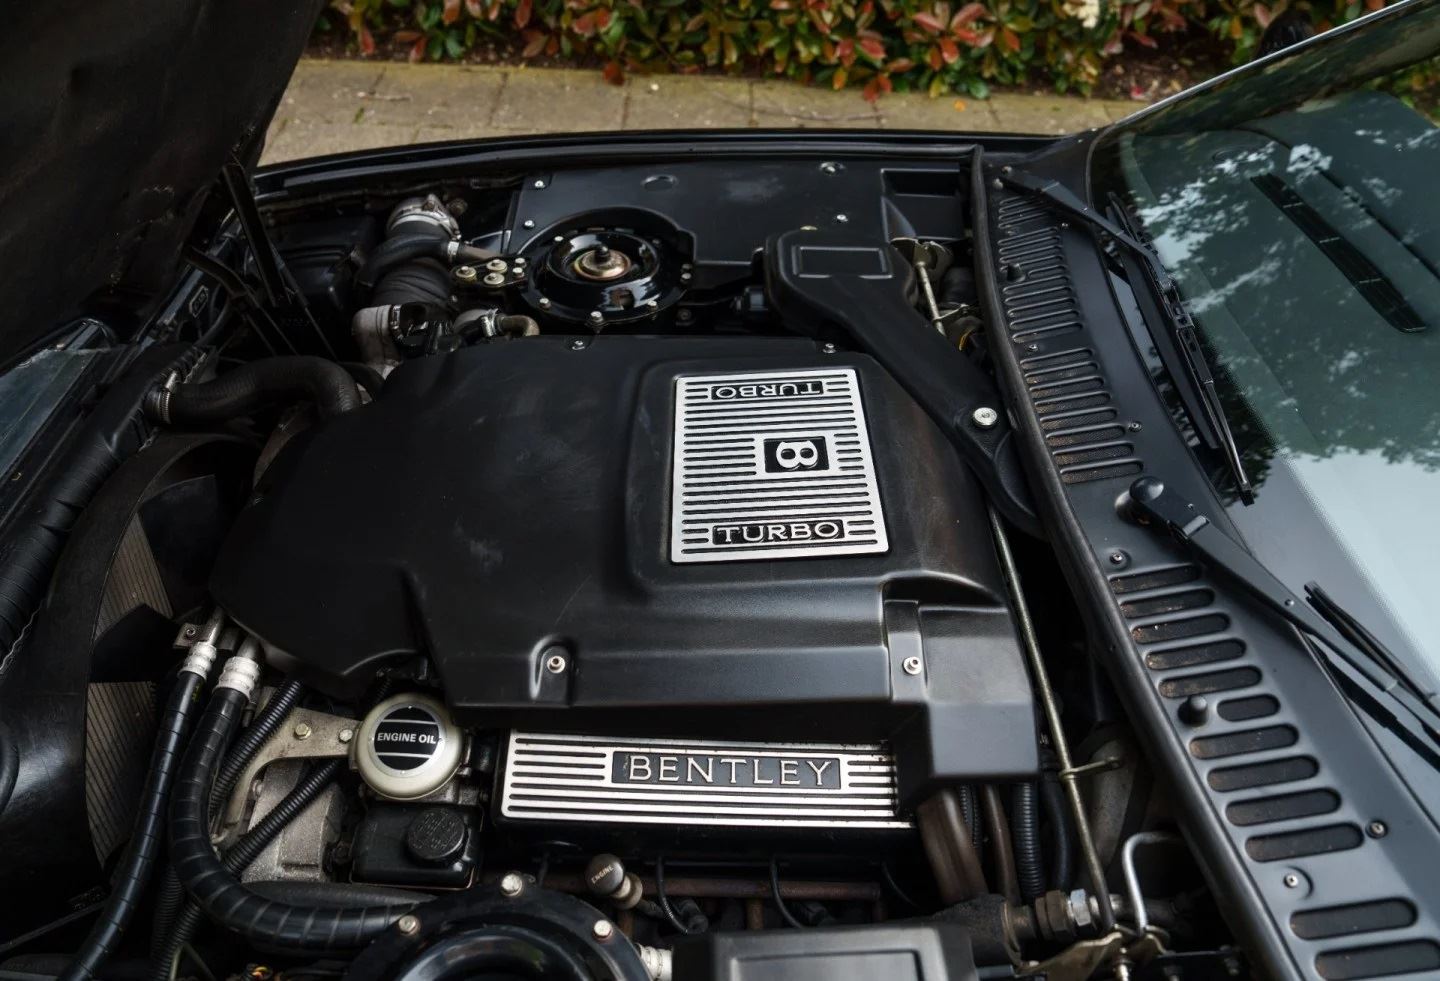 Bentley continental g8daudmvkyrzerborqczx